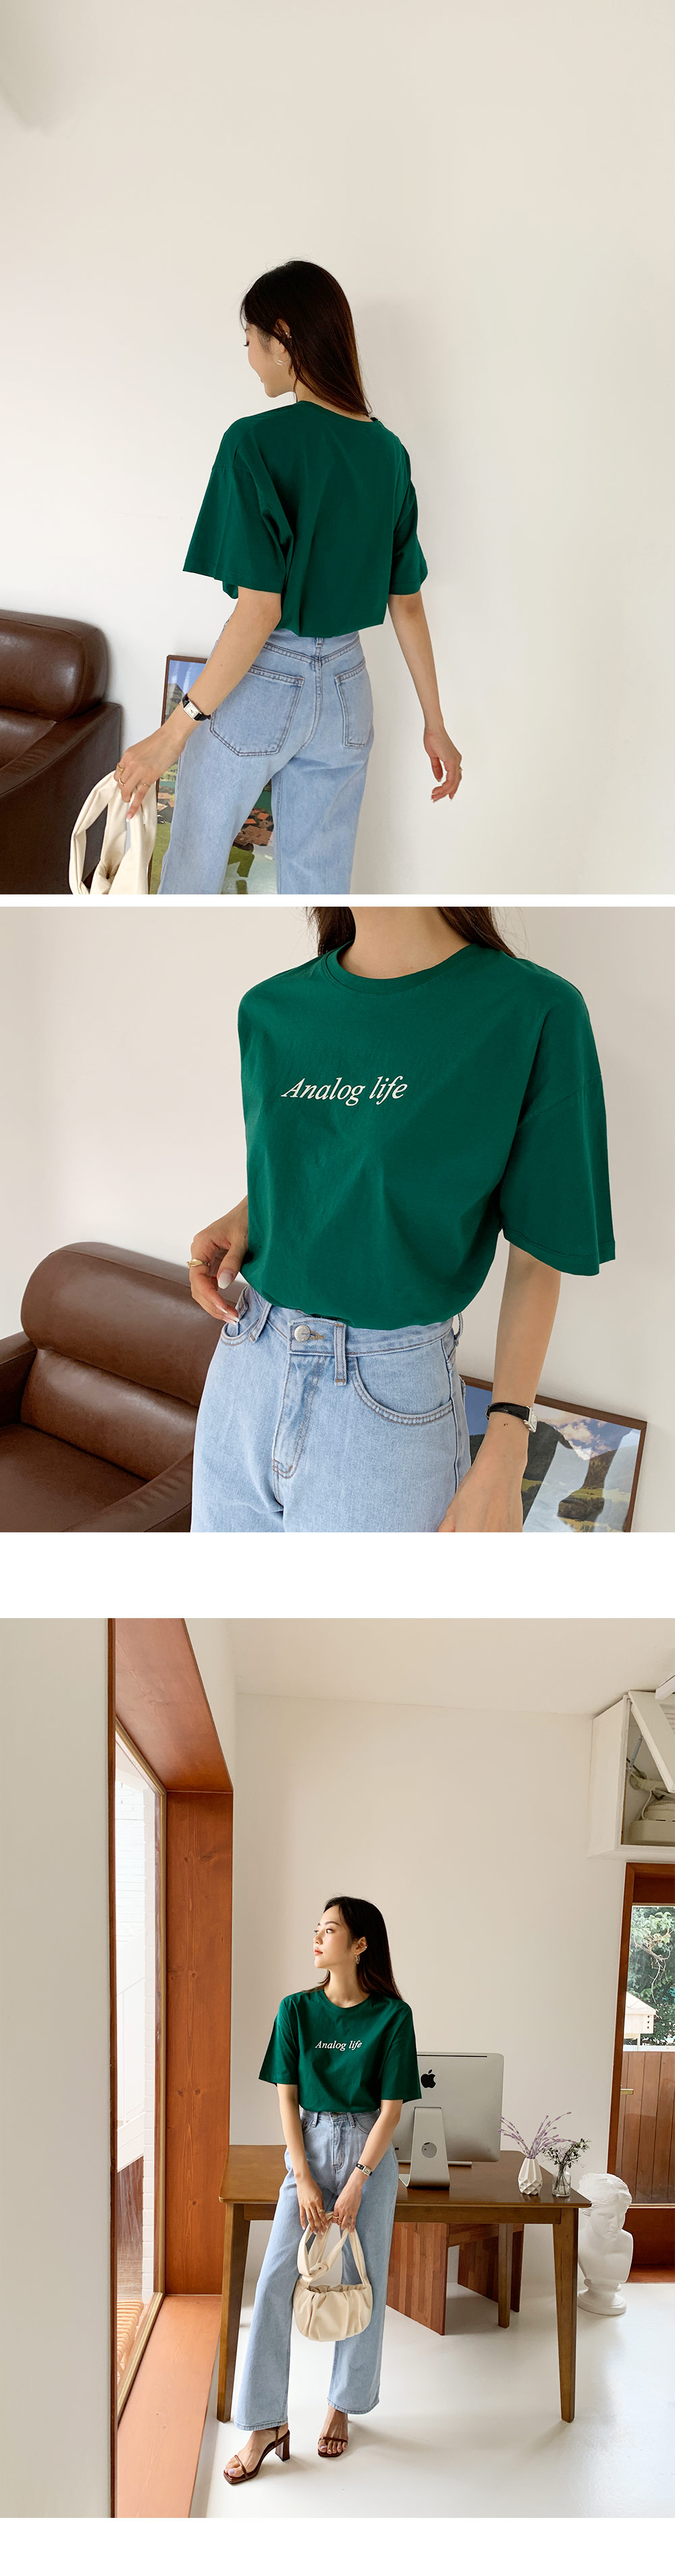 Analog life半袖Tシャツ・全4色 | DHOLIC | 詳細画像5